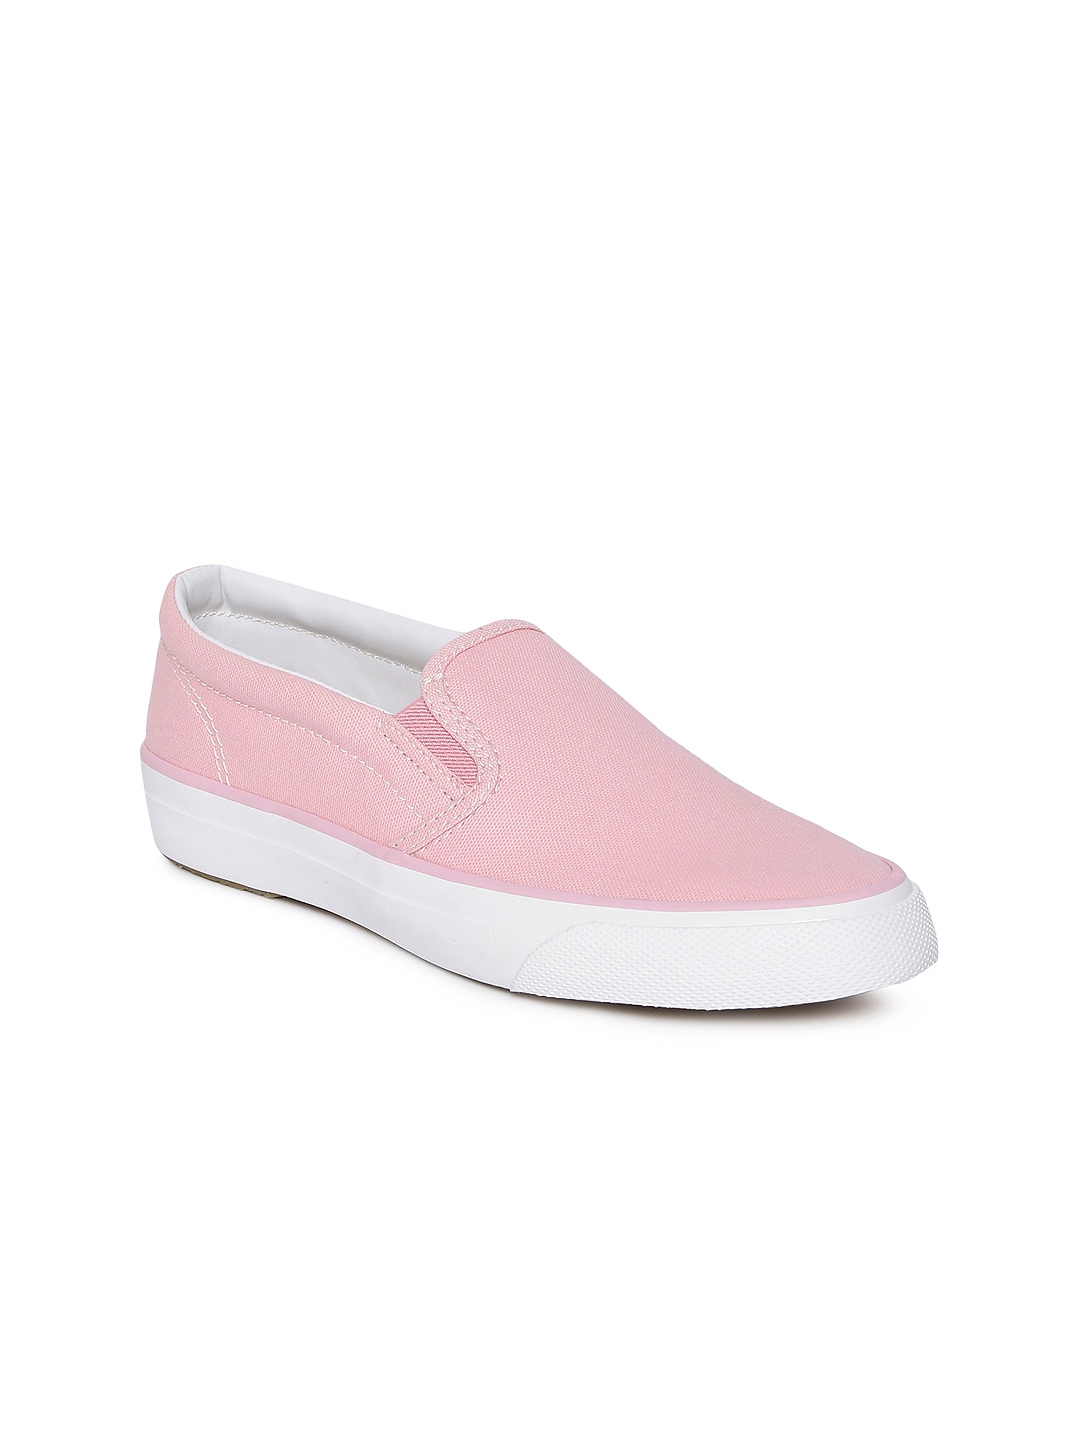 Buy Keds Women Pink Solid Slip On 